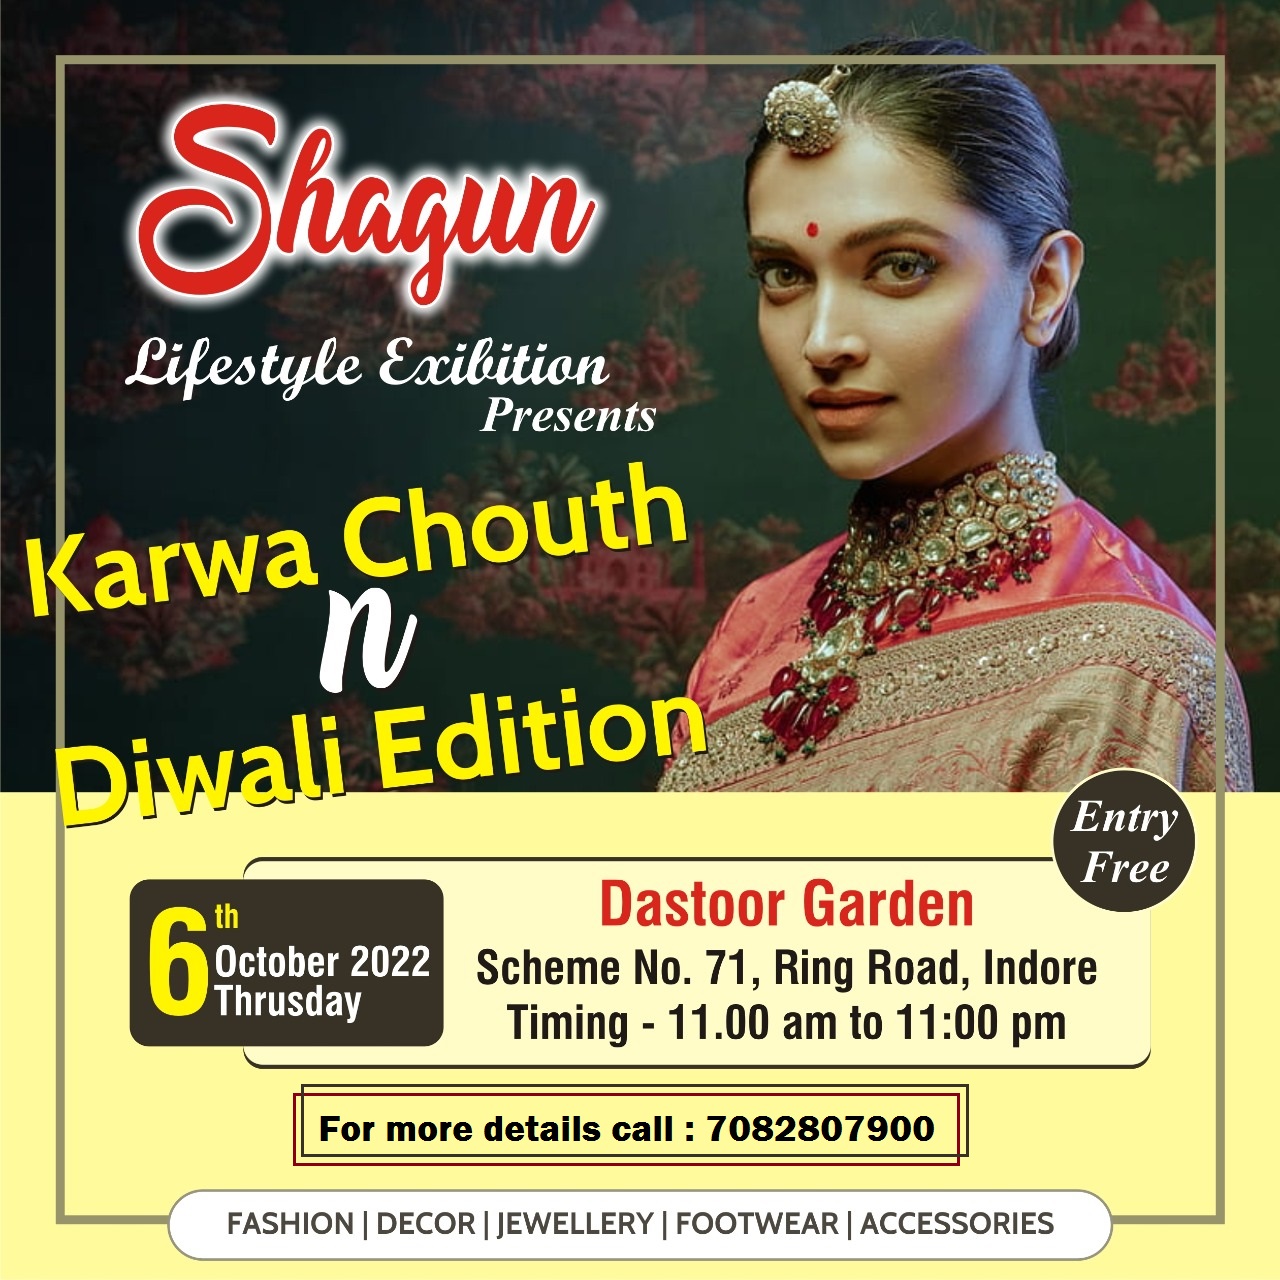 Karwachauth and Diwali Edition